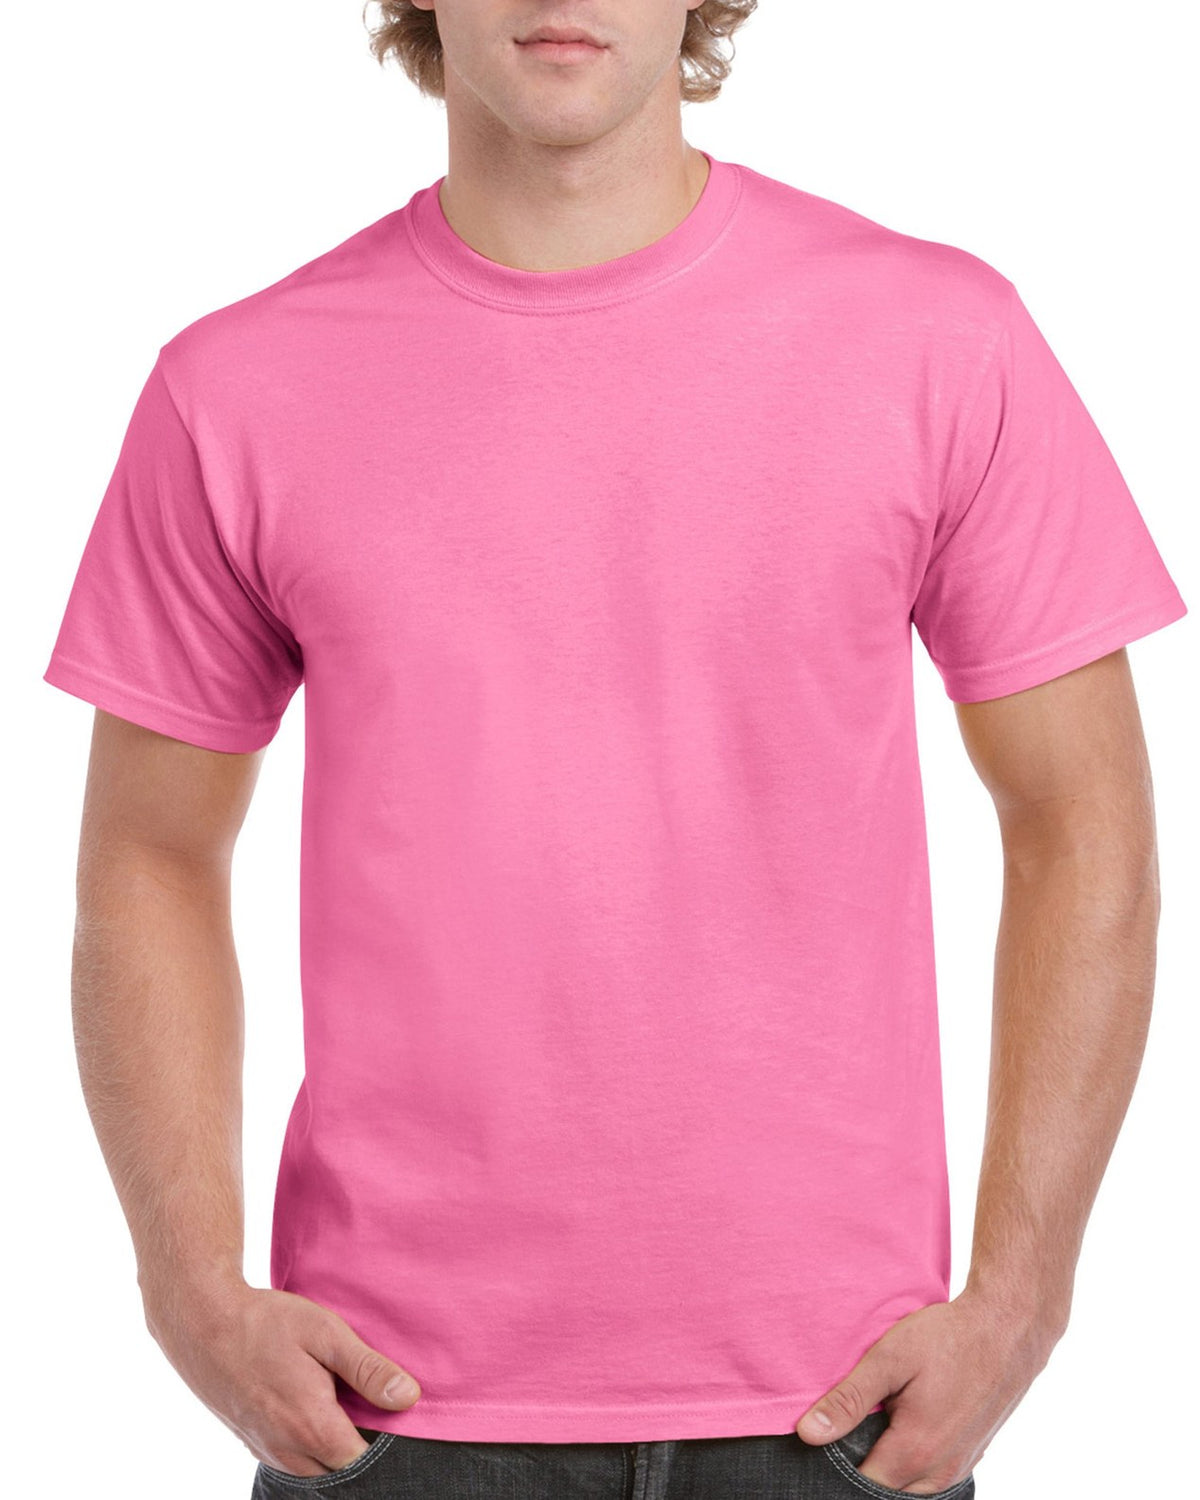 Gildan Heavyweight Cotton Tee Shirt, Color: Light Pink, Size: XX-Large